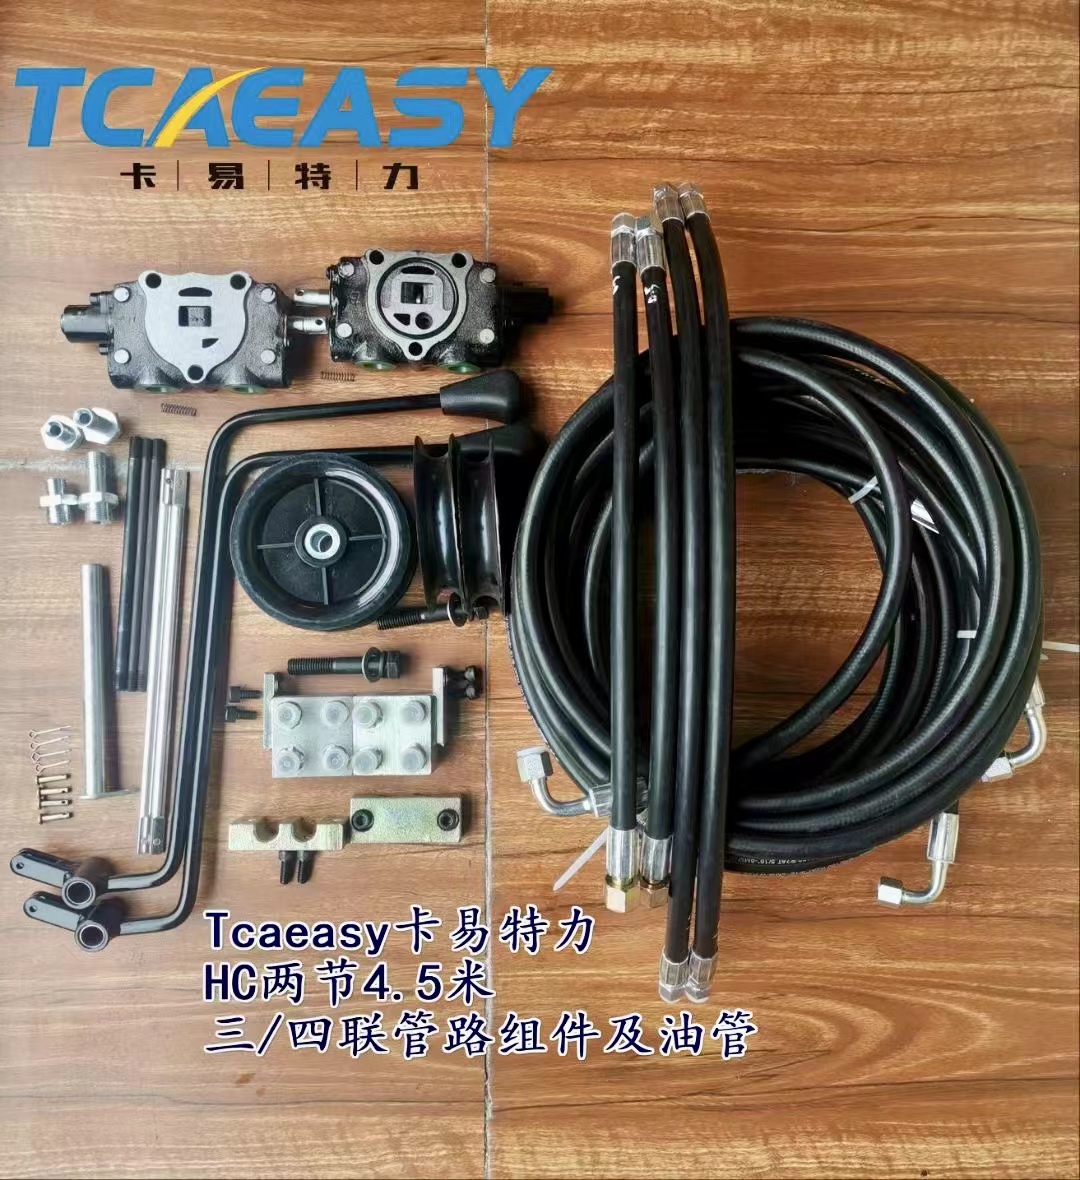 HANGZHOU Forklift Attachment Tubing HC1002